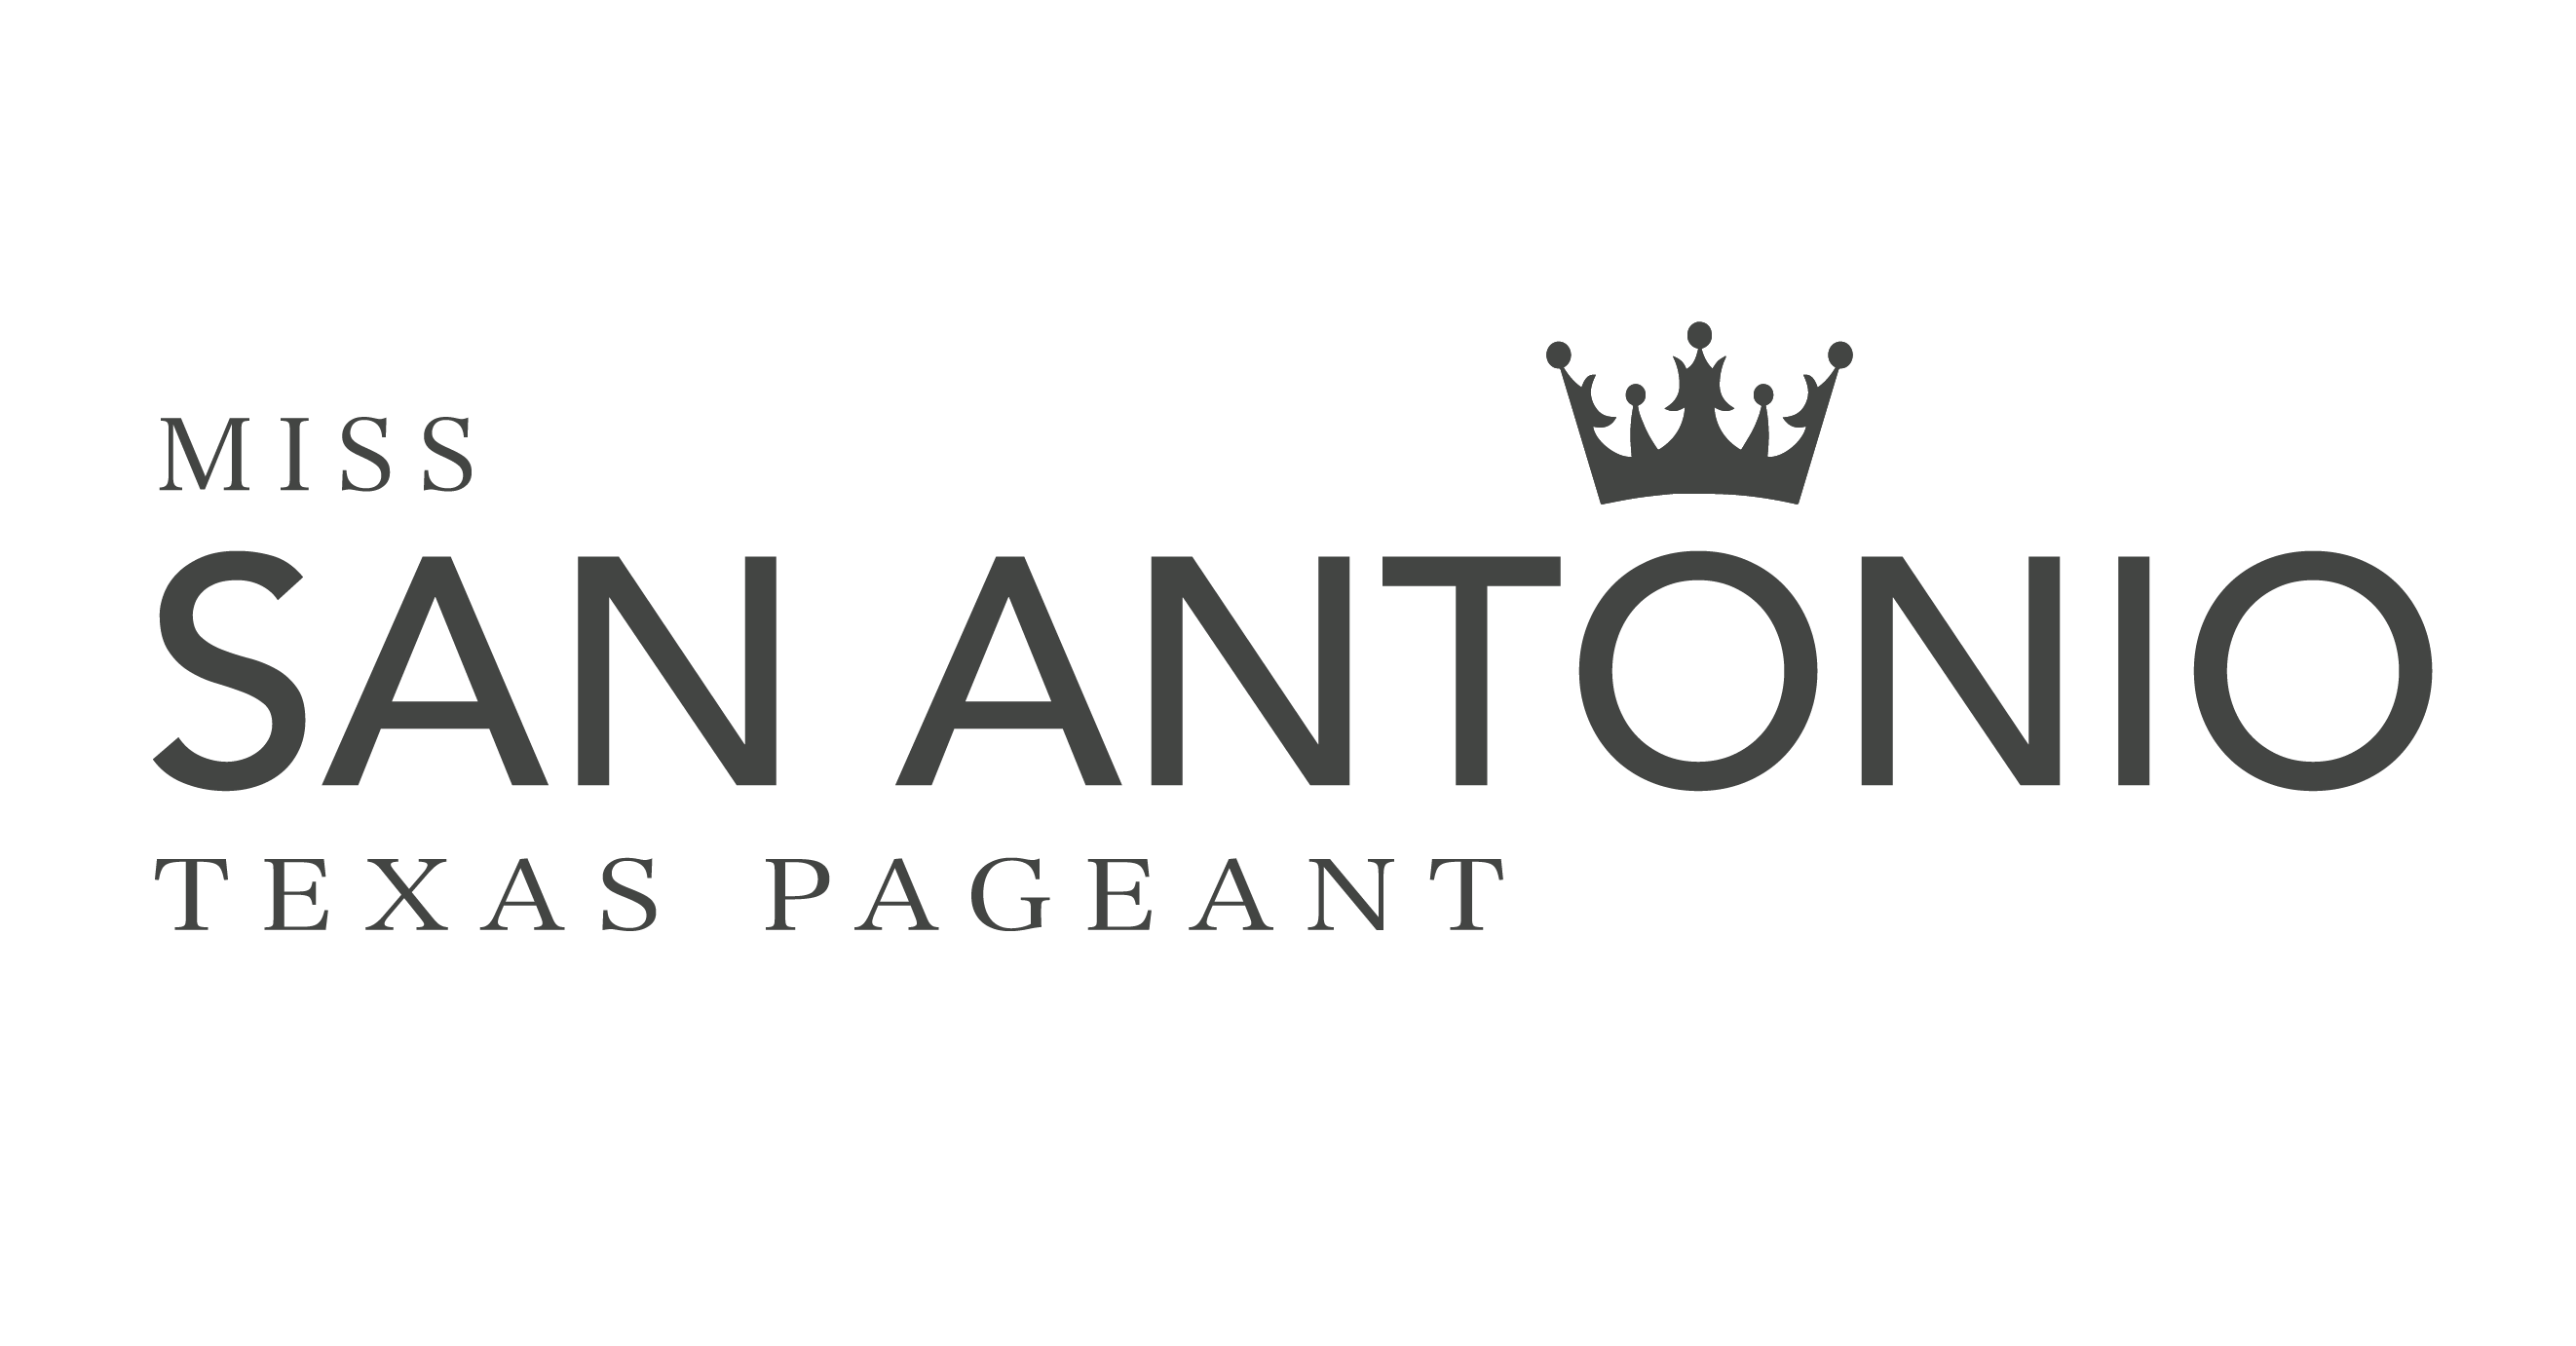 San Antonio Texas Pageant